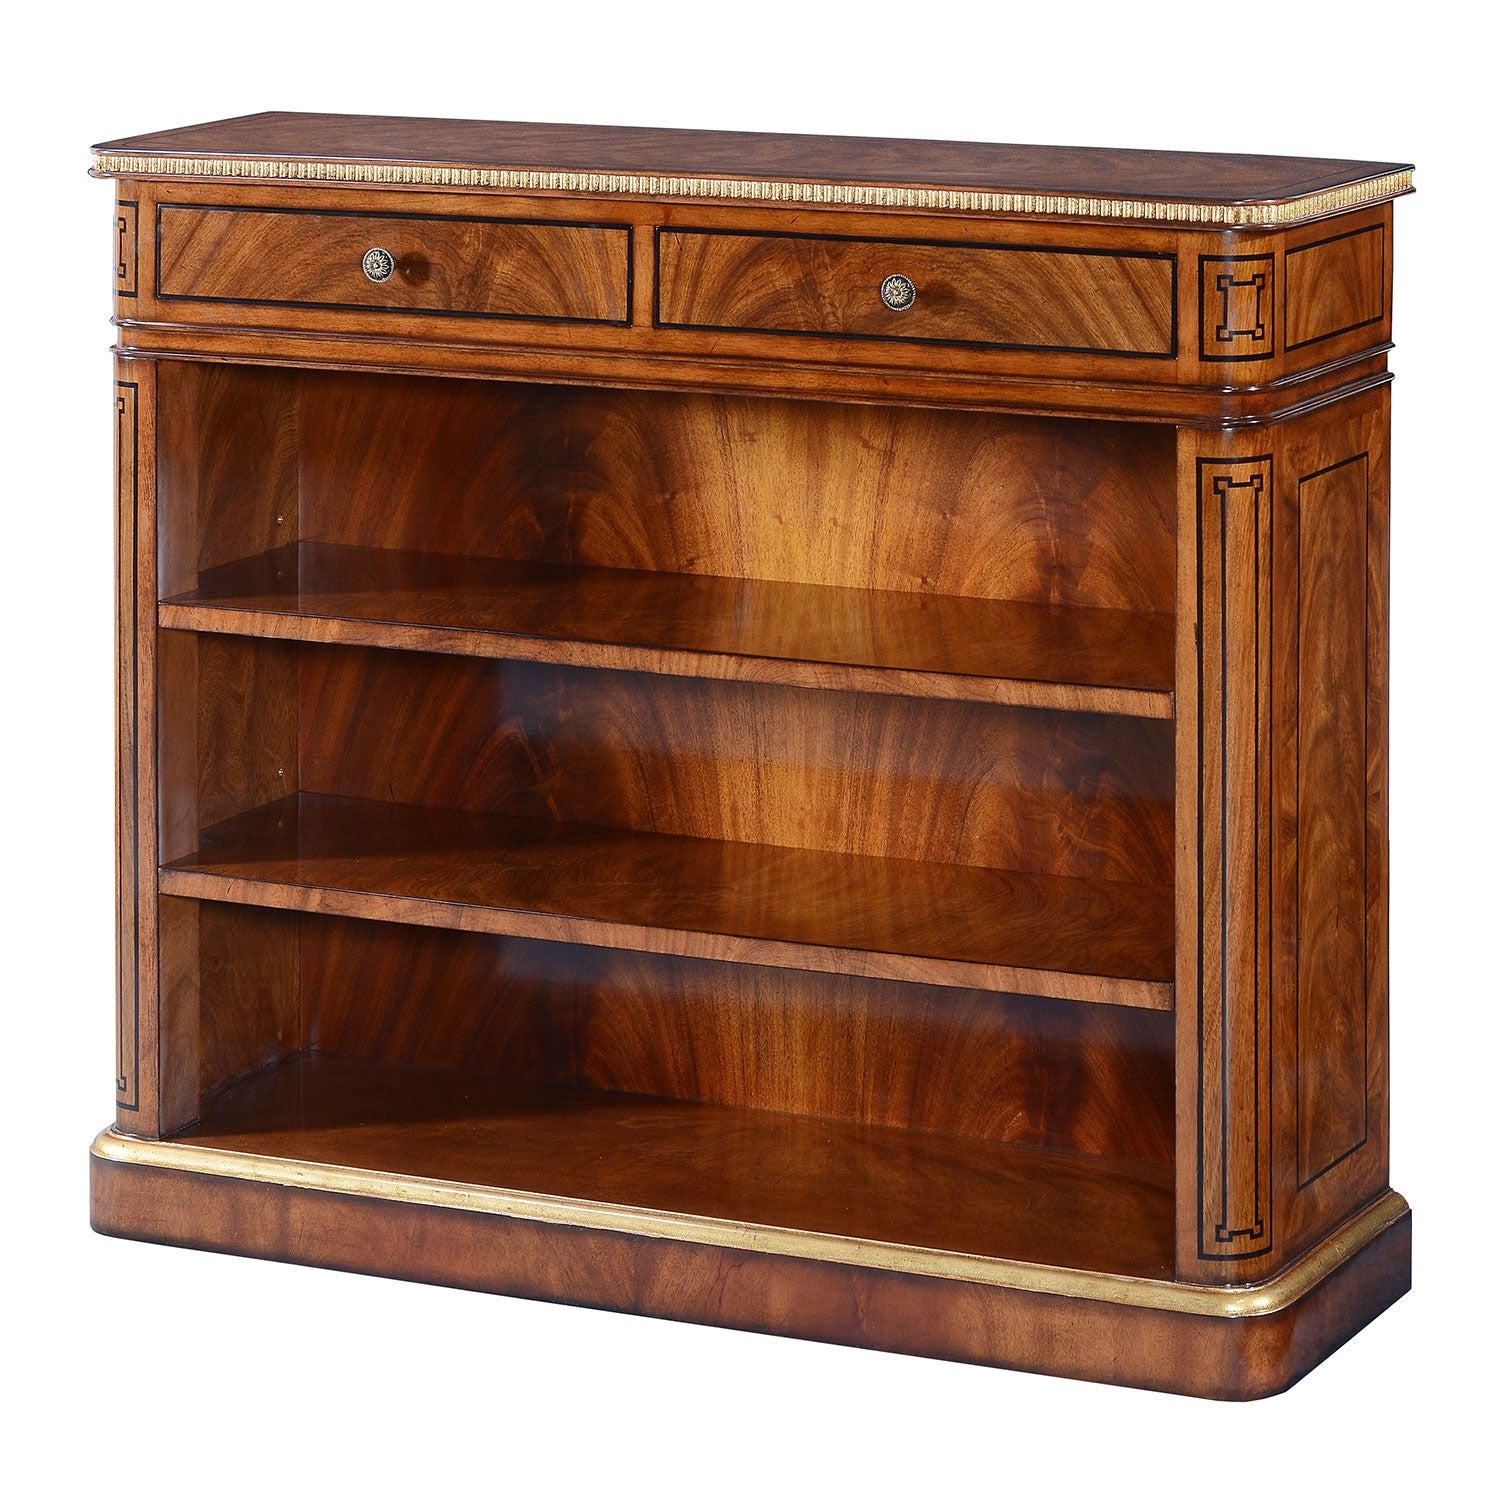 Thomas Hope style mahogany & gilded open bookcase - 42in